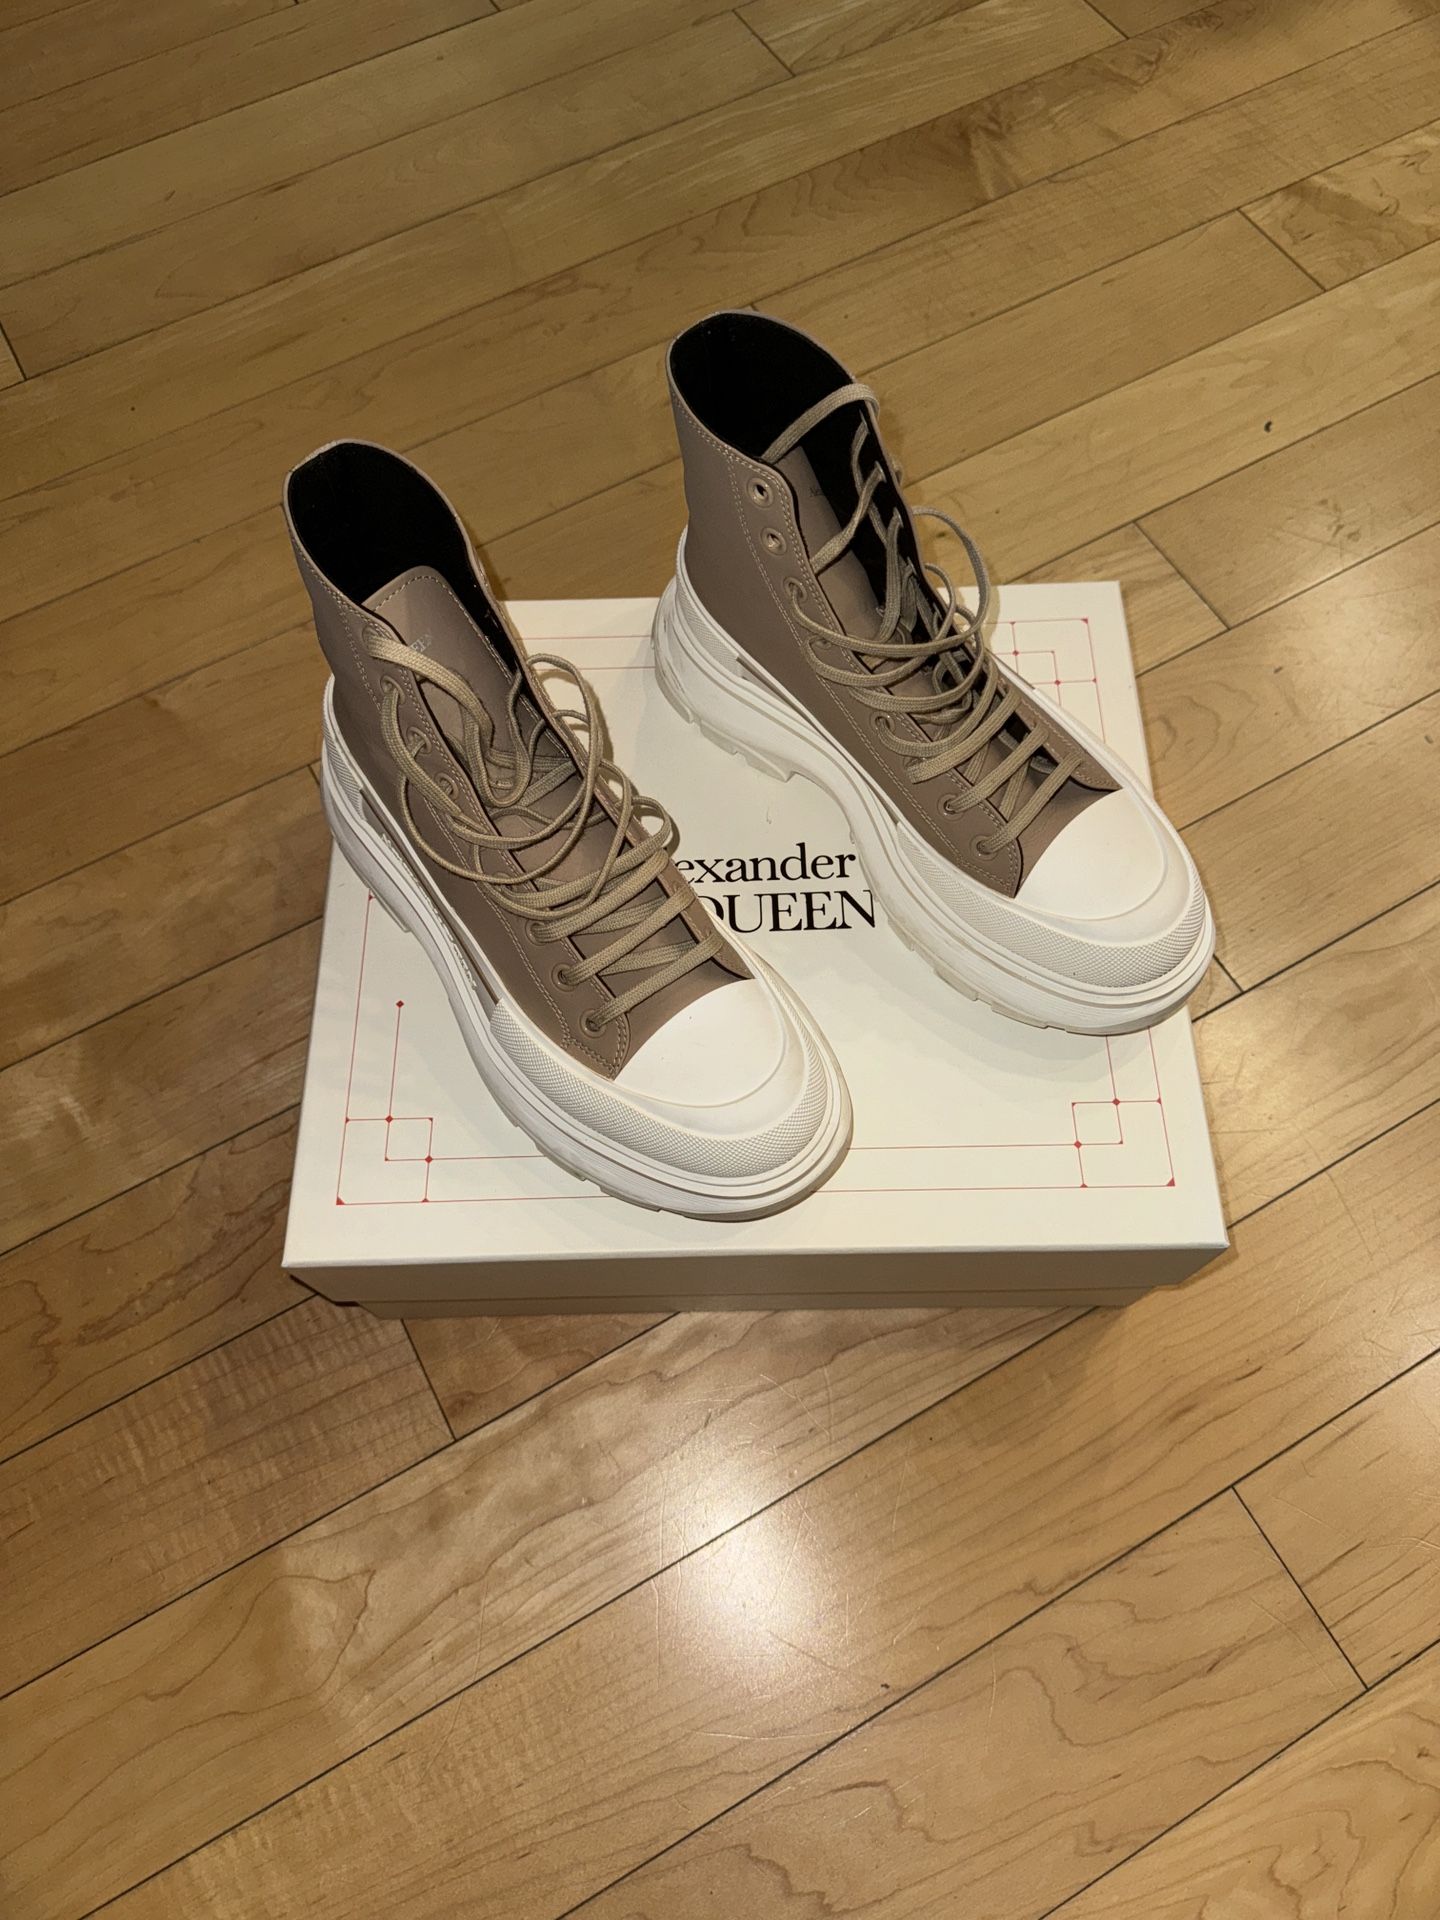 Alexander McQueen Tread Slick High Top Leather Boot Sneaker Size 42.5 9.5m